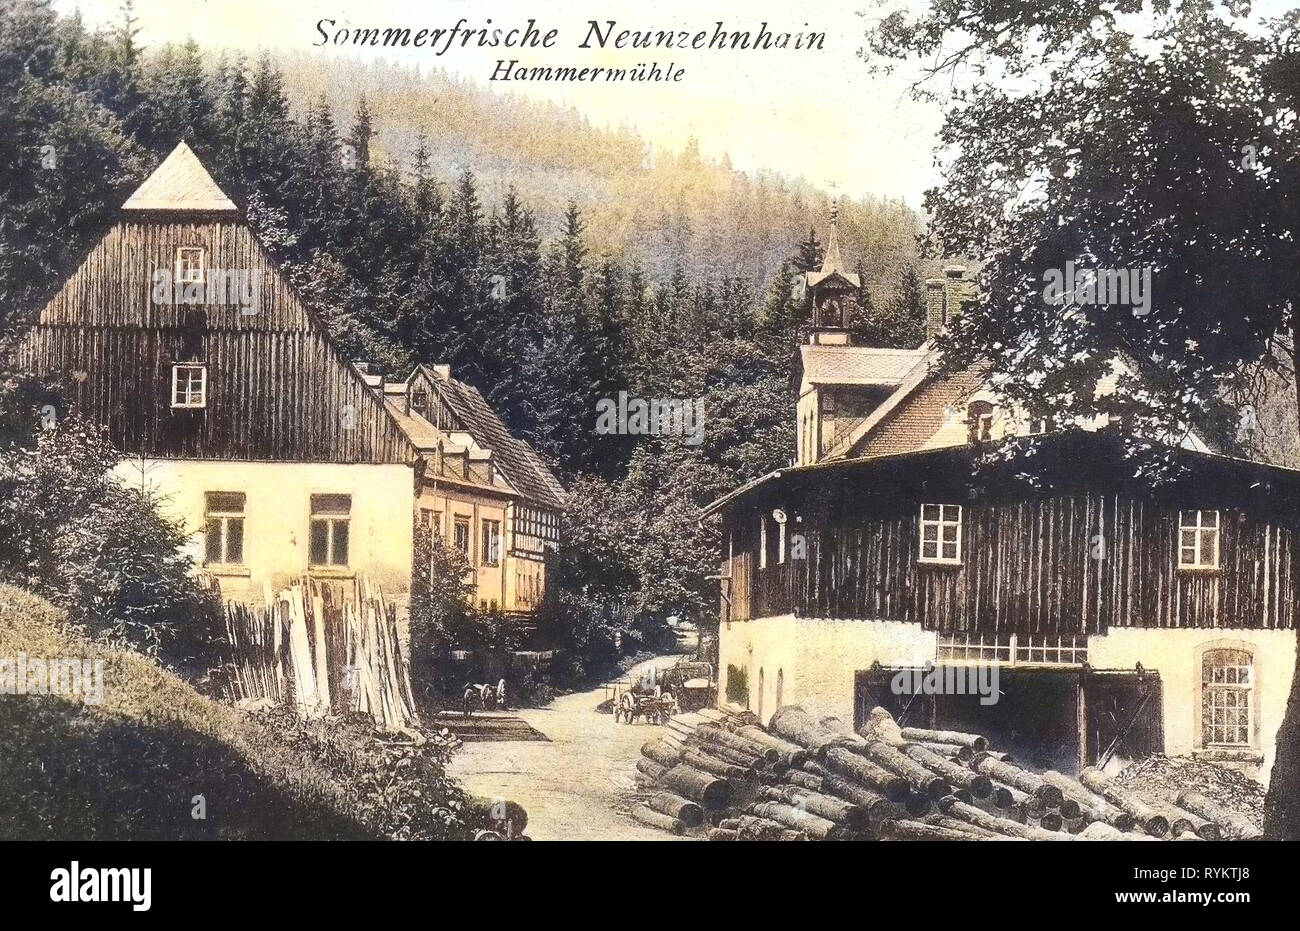 Sawmills in Saxony, Buildings in Erzgebirgskreis, 1920, Erzgebirgskreis, Neunzehnhain, Hammermühle, Germany Stock Photo